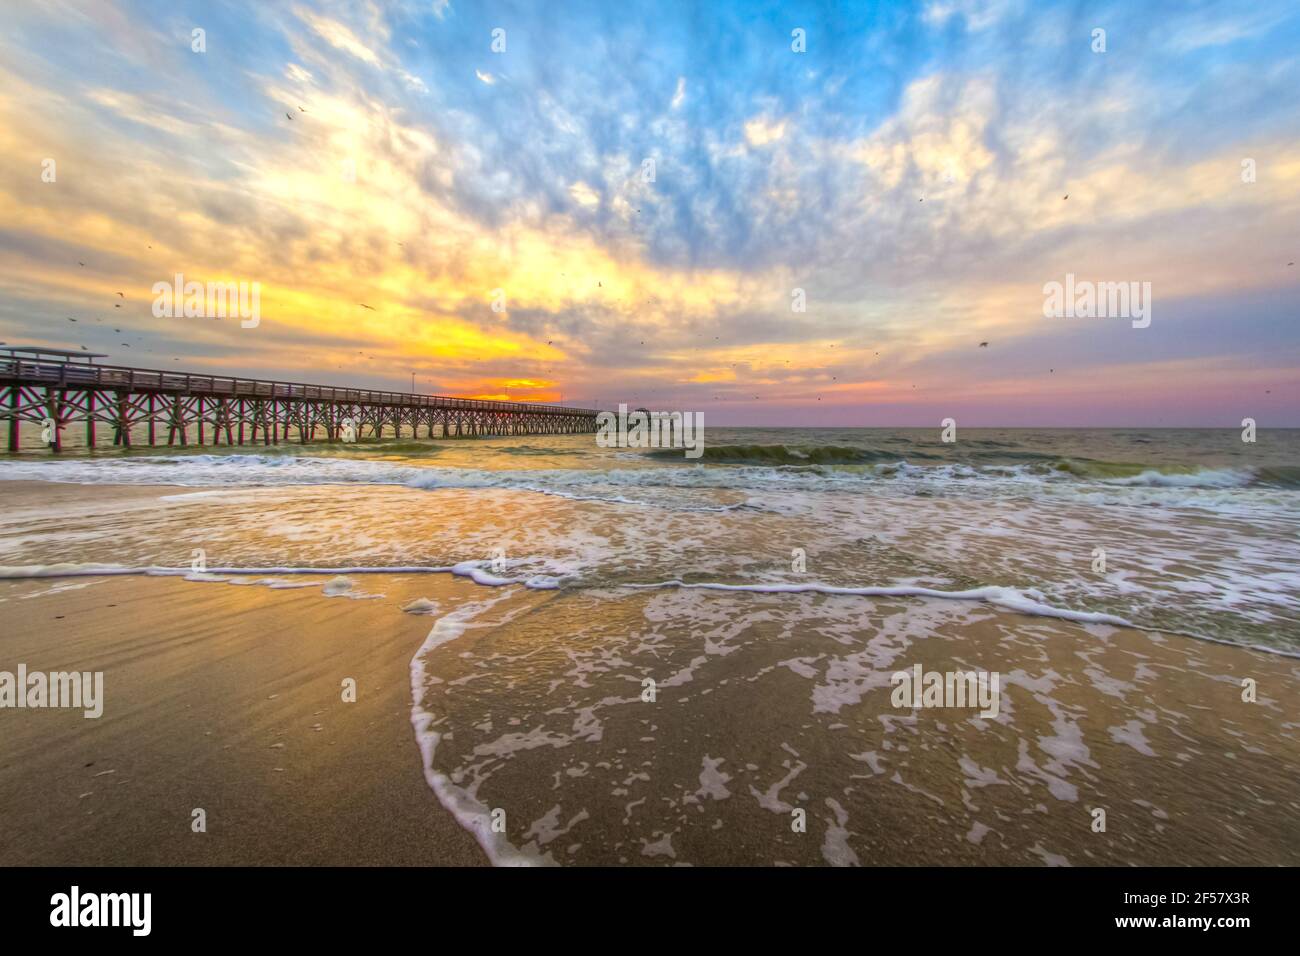 Myrtle Beach Sunrise Landscape. Sunrise on a wide sandy beach with fishing pier on the coast of the Atlantic Ocean in Myrtle Beach, South Carolina USA Stock Photo